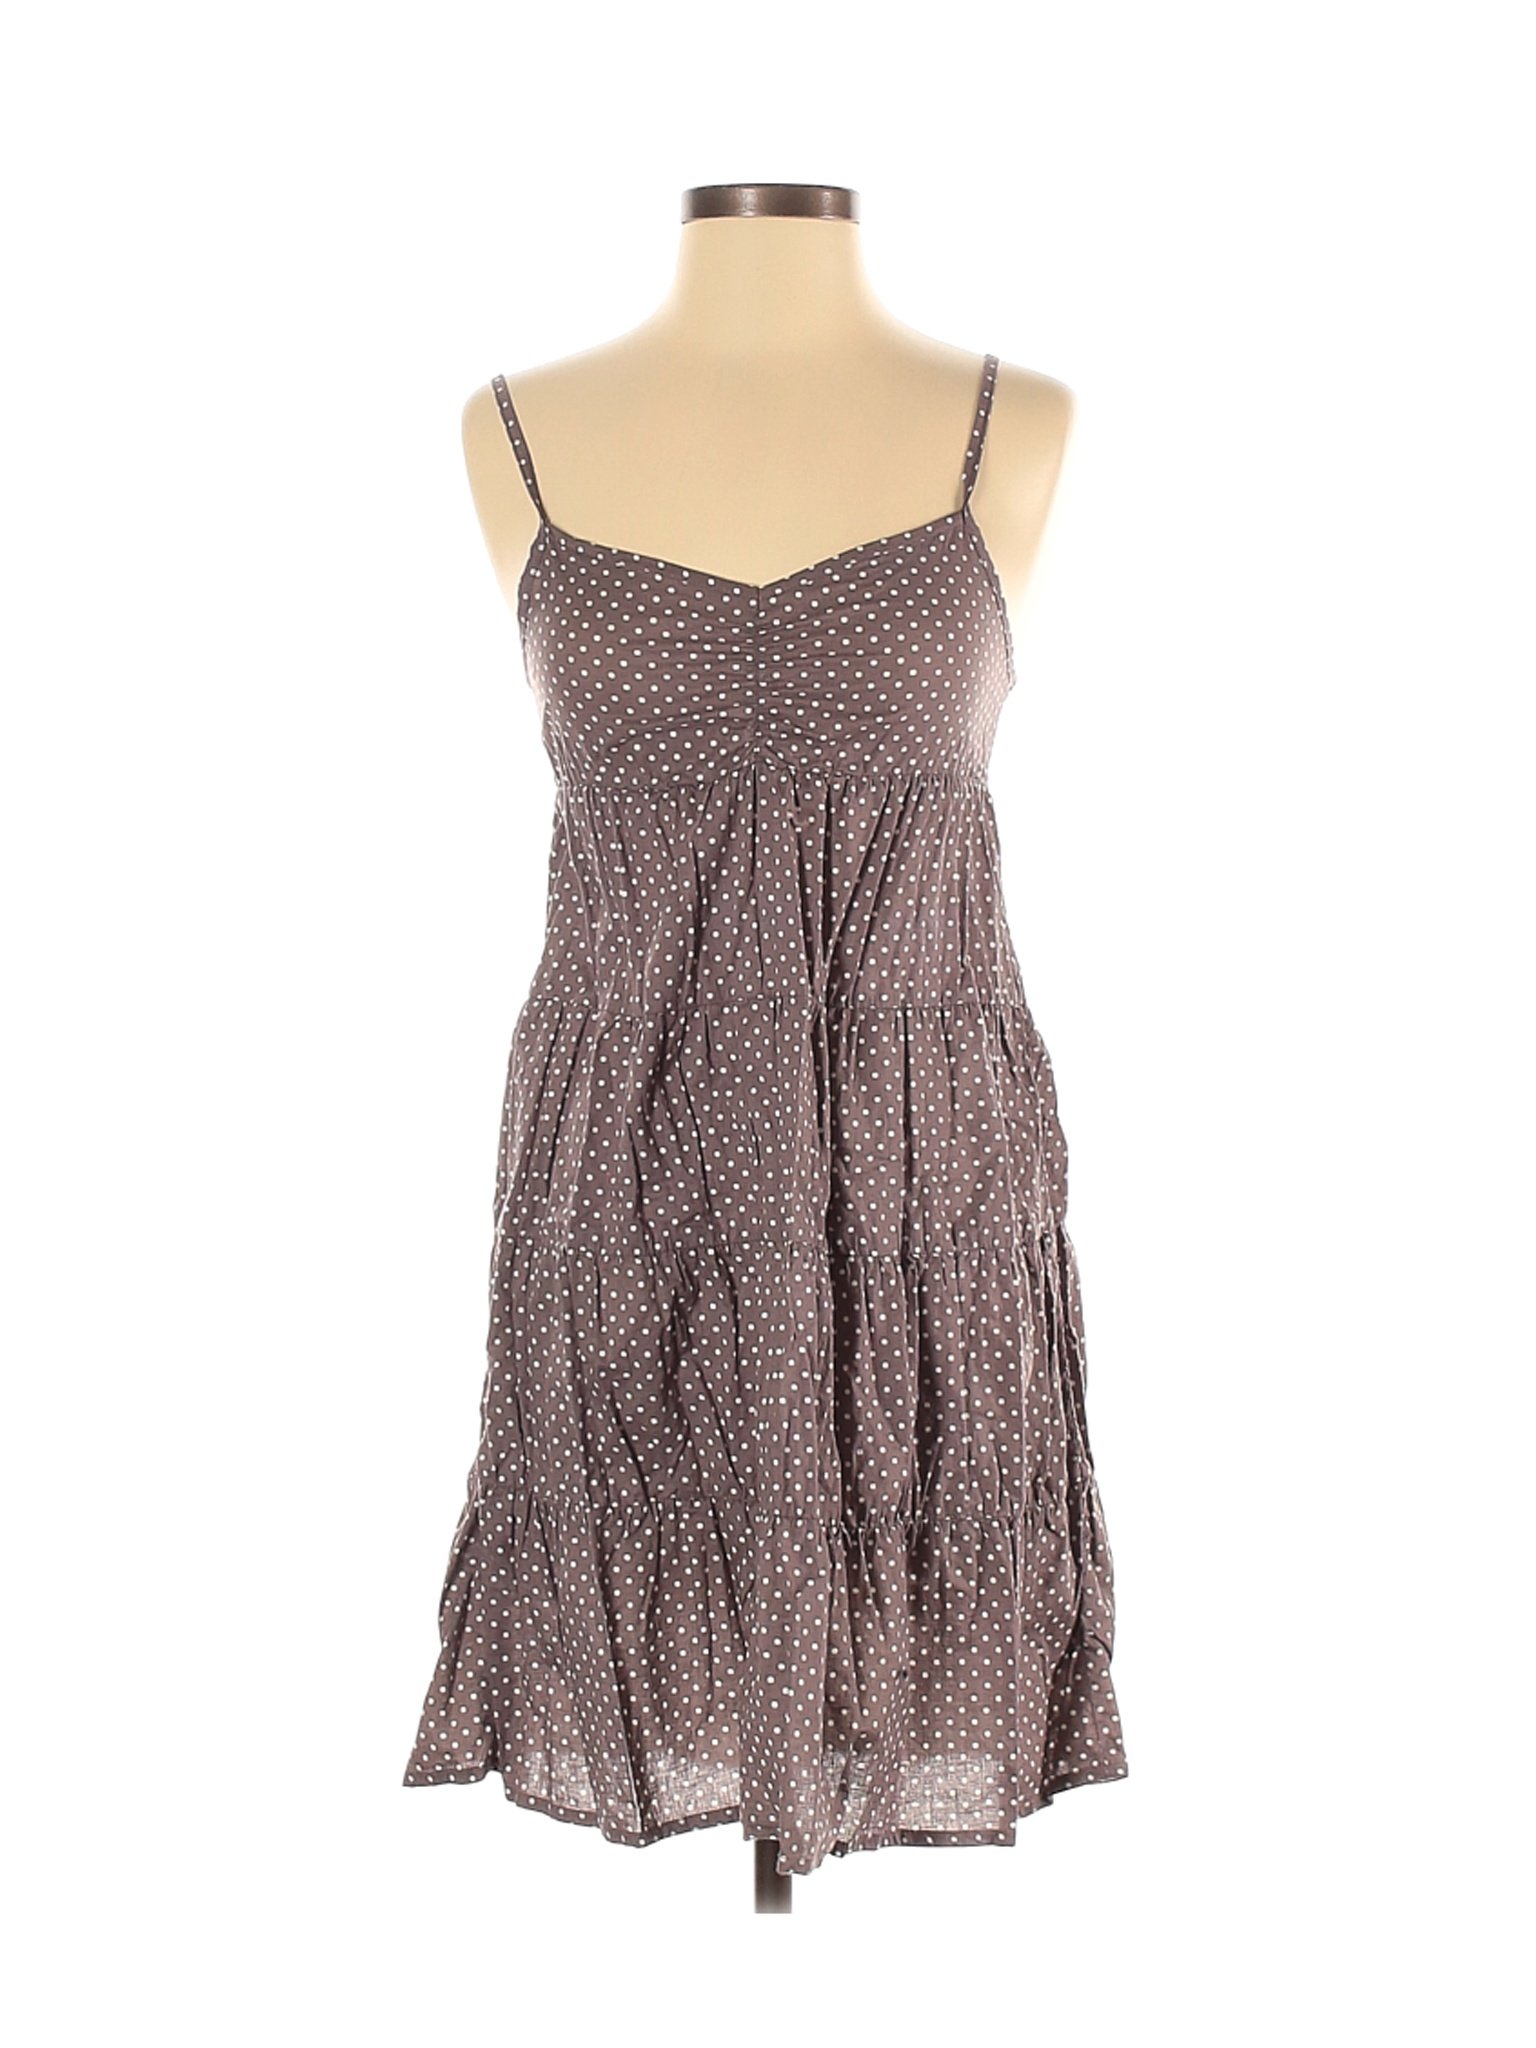 H&M Women Brown Casual Dress 4 | eBay